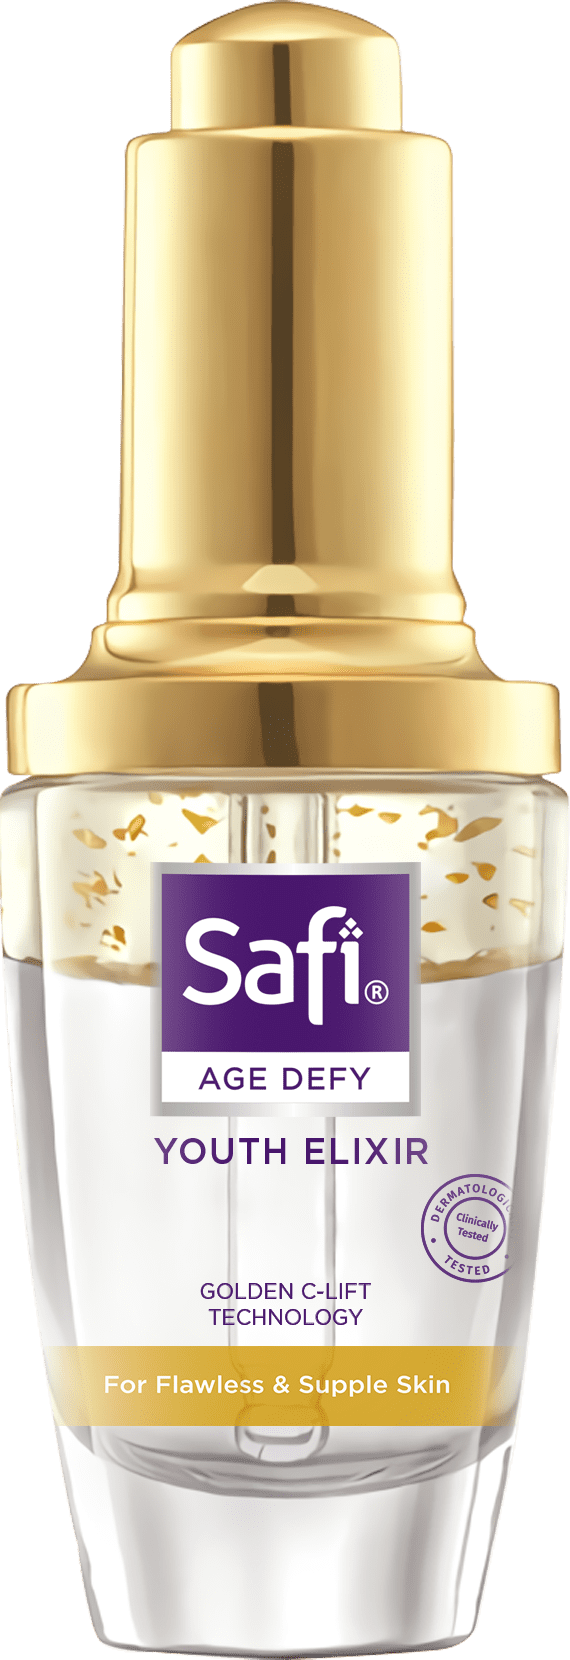 Safi Age Defy Youth Elixir